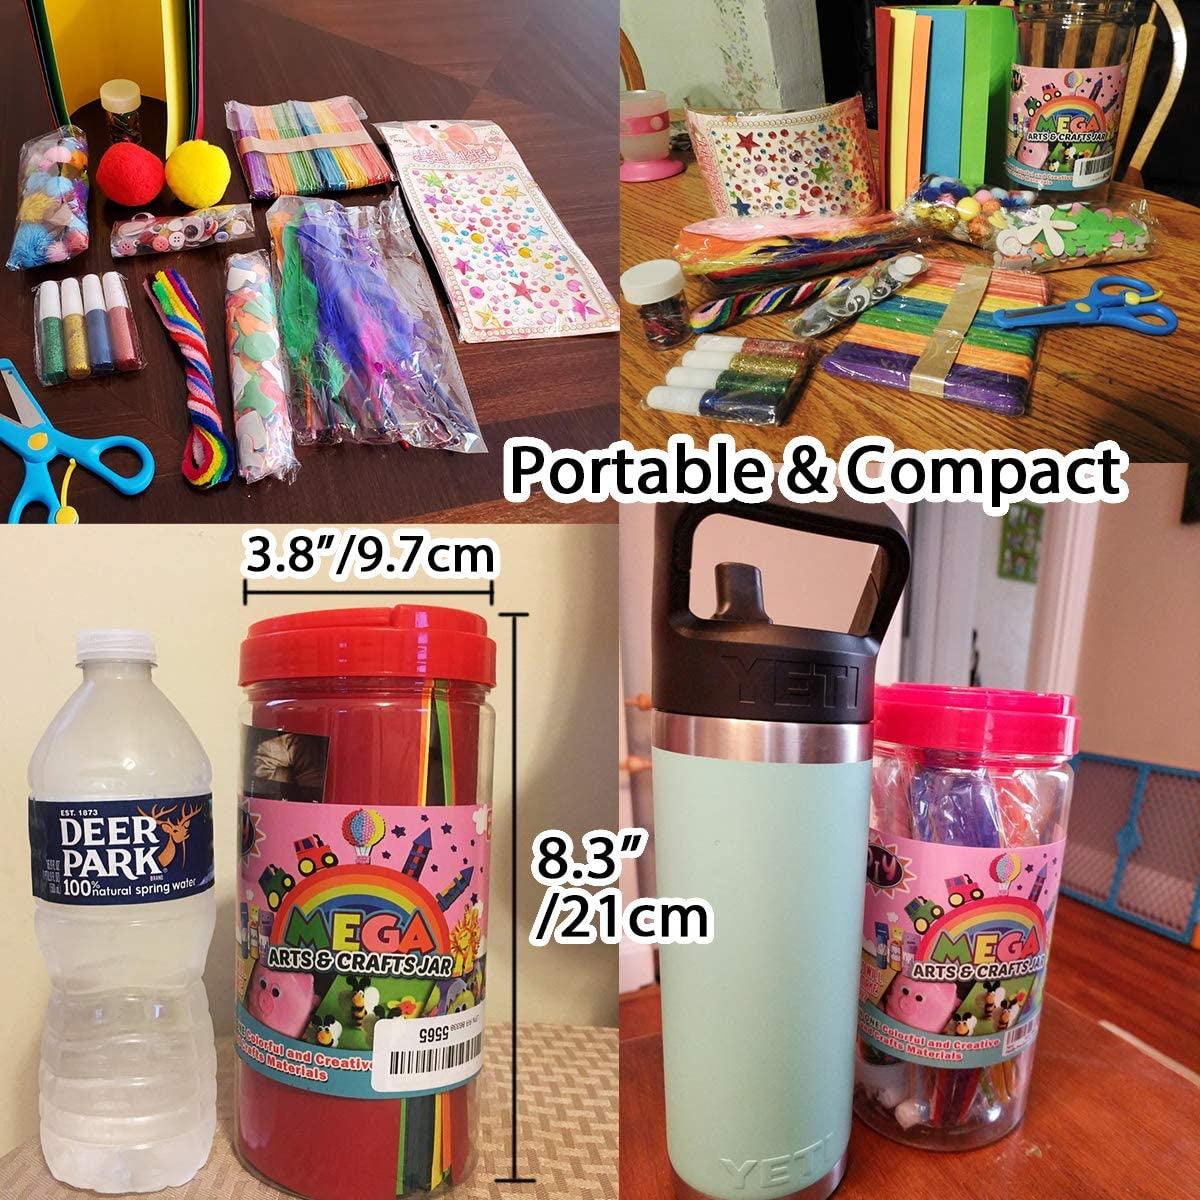 Arts and Crafts Supplies for Kids - Craft Art Supply Kit D.I.Y. Crafting School Kindergarten Supplies - WoodArtSupply